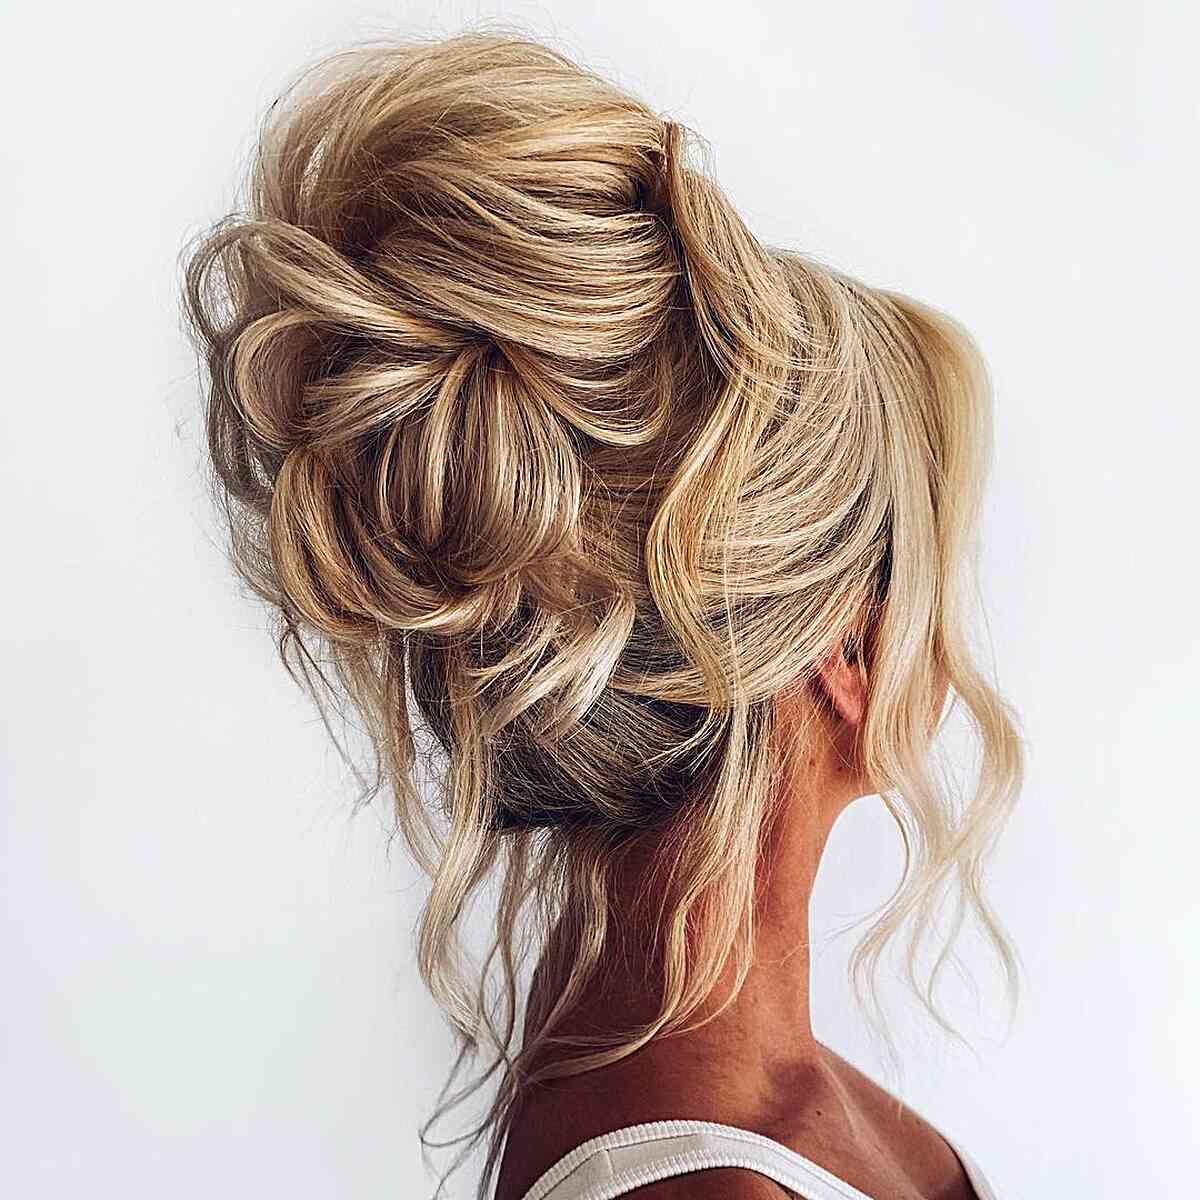 16 Tutorials For Easy Hairstyles For Long Hair - L'Oréal Paris